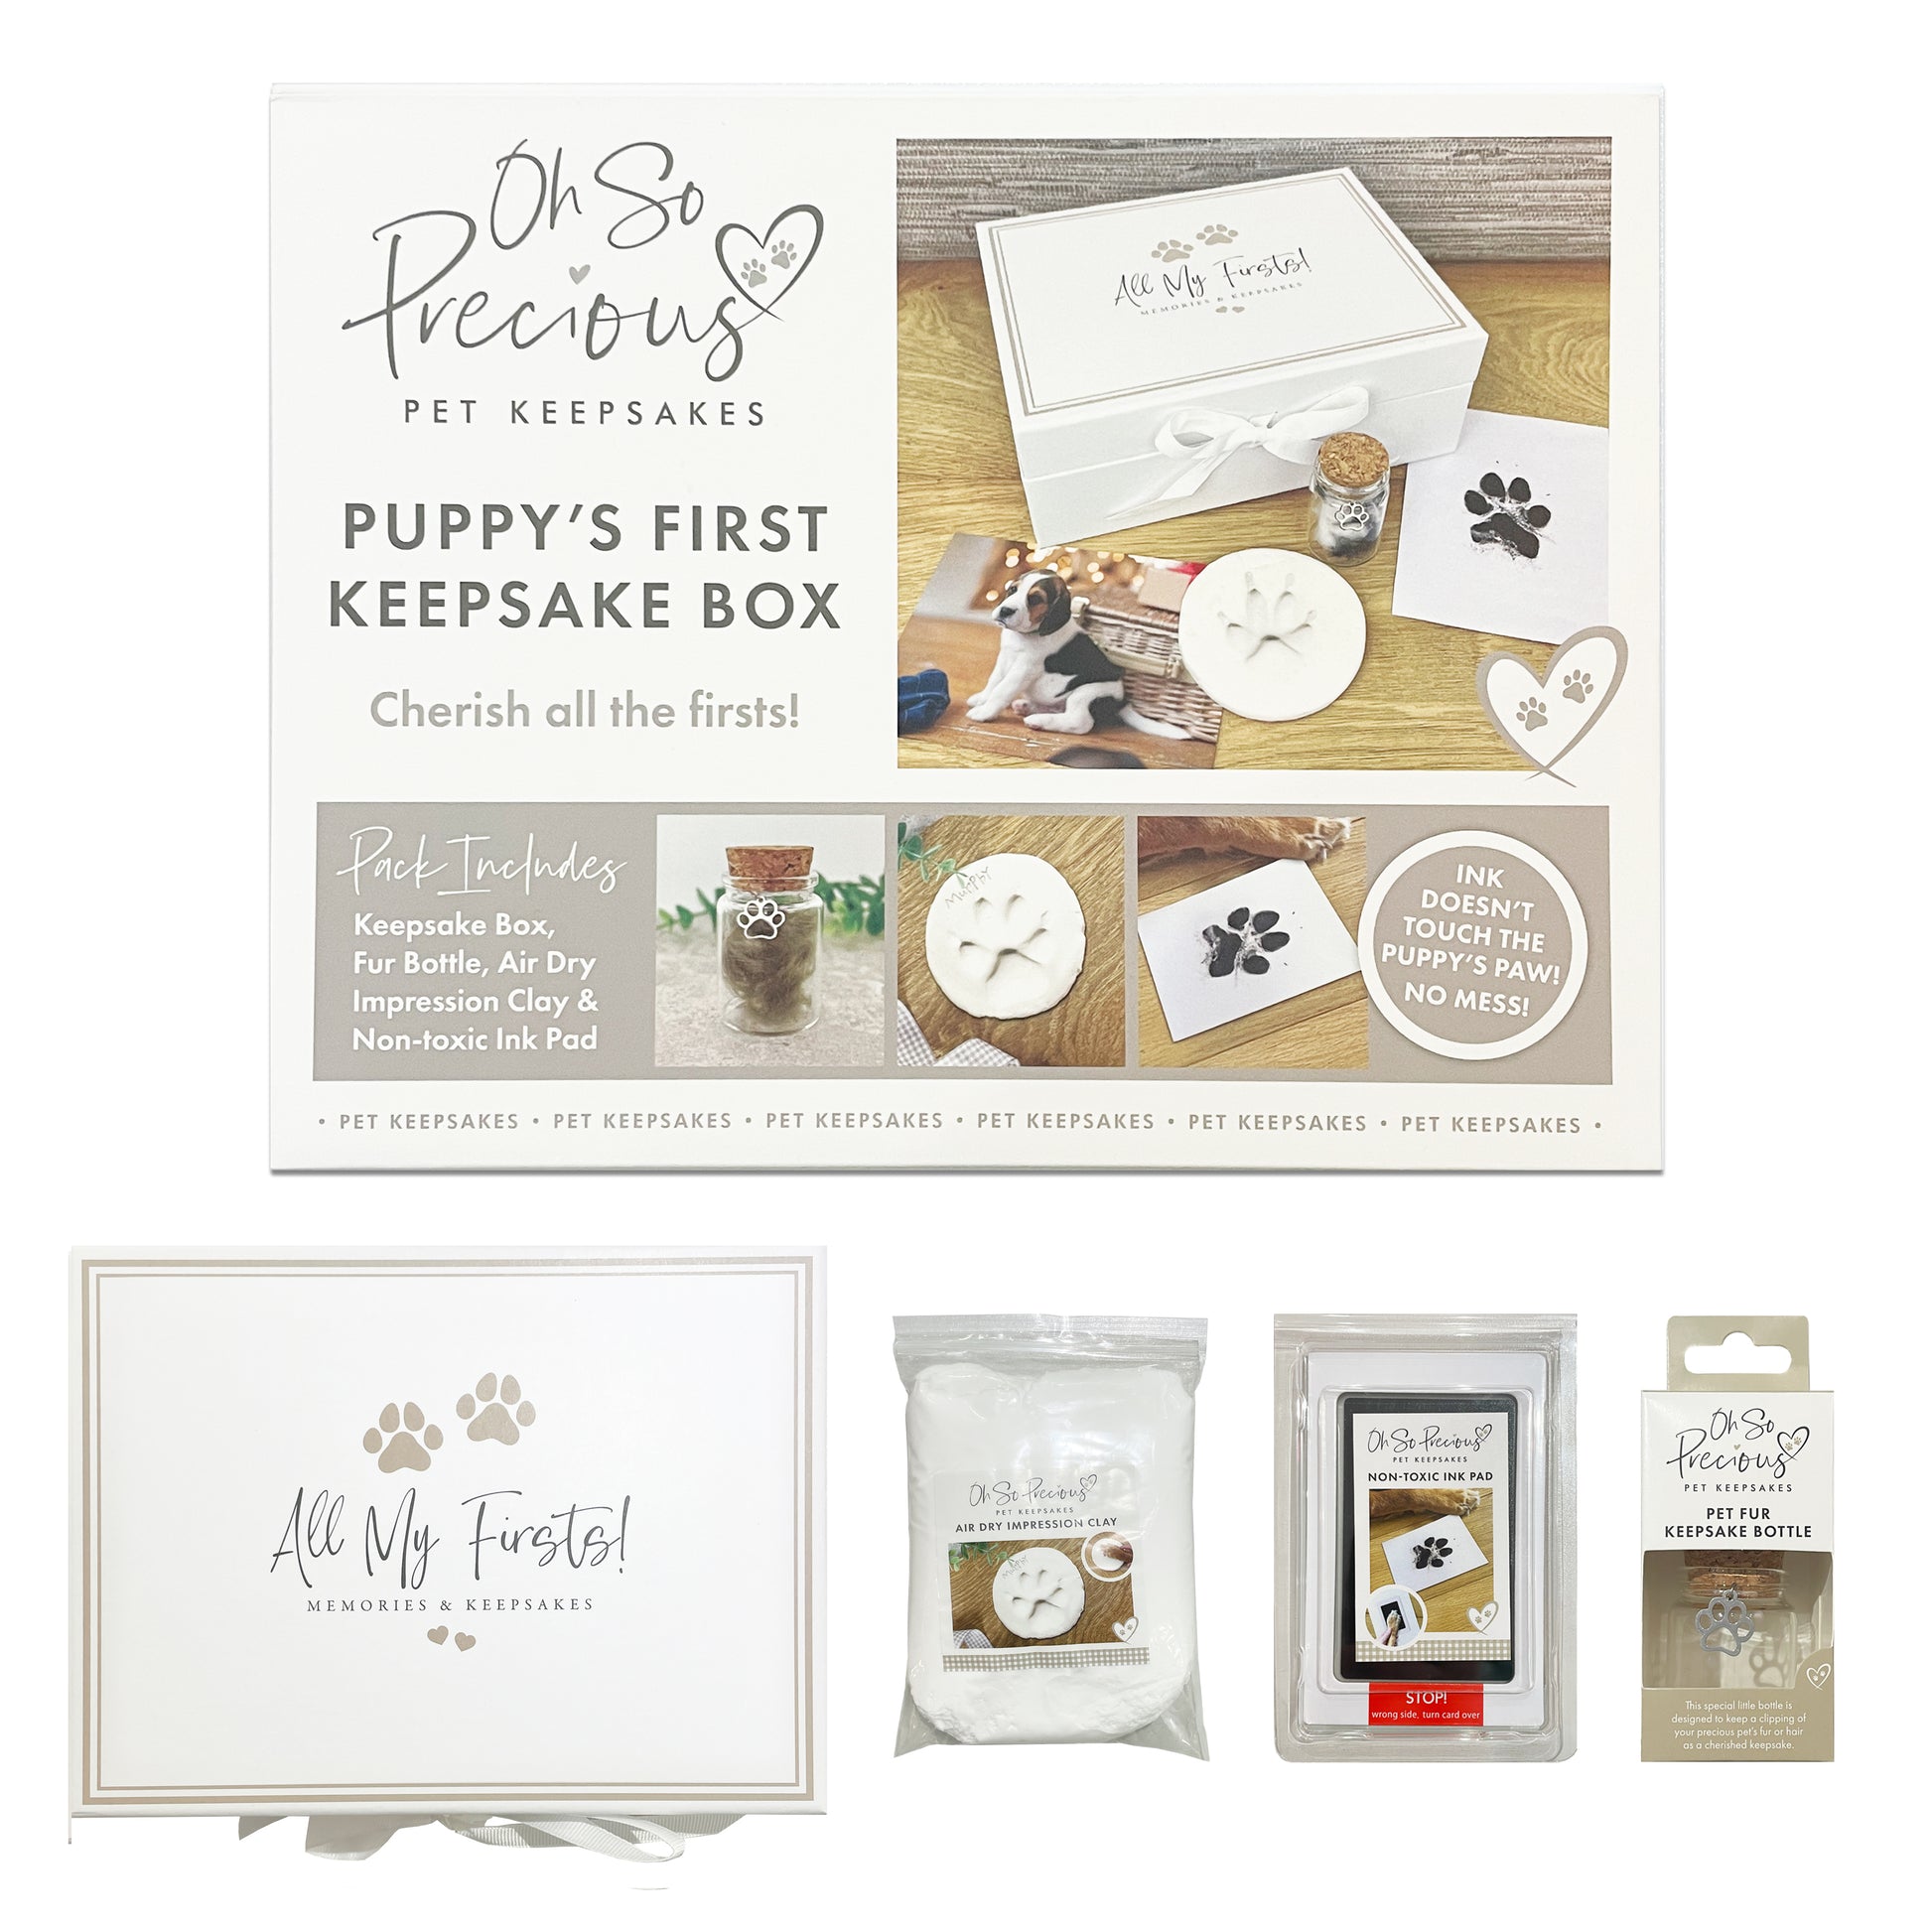 Oh So Prescious - Pet Safe Non-toxic Paw Print Ink Pad Kit